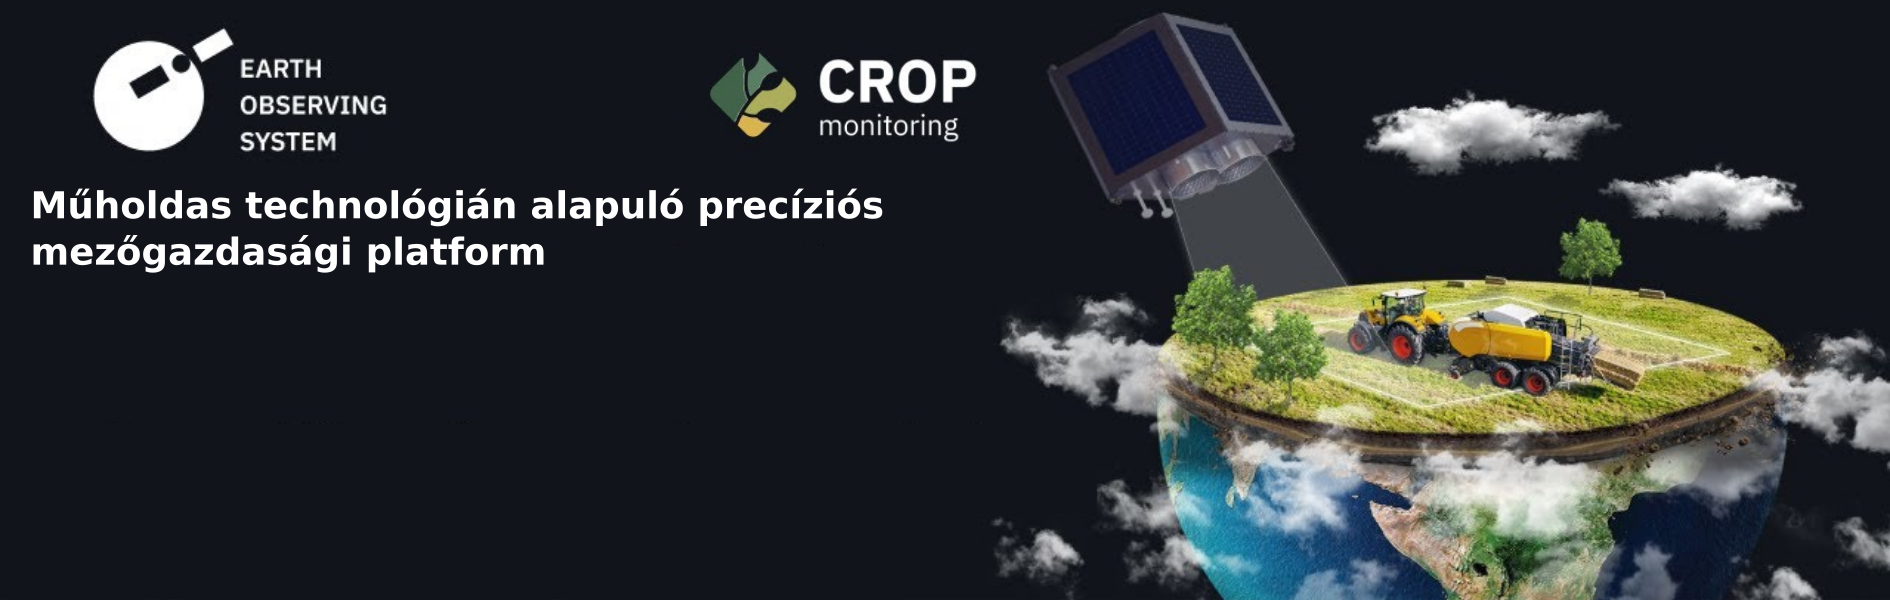 Bemutatjuk az EOS Növény Monitoring platformot!